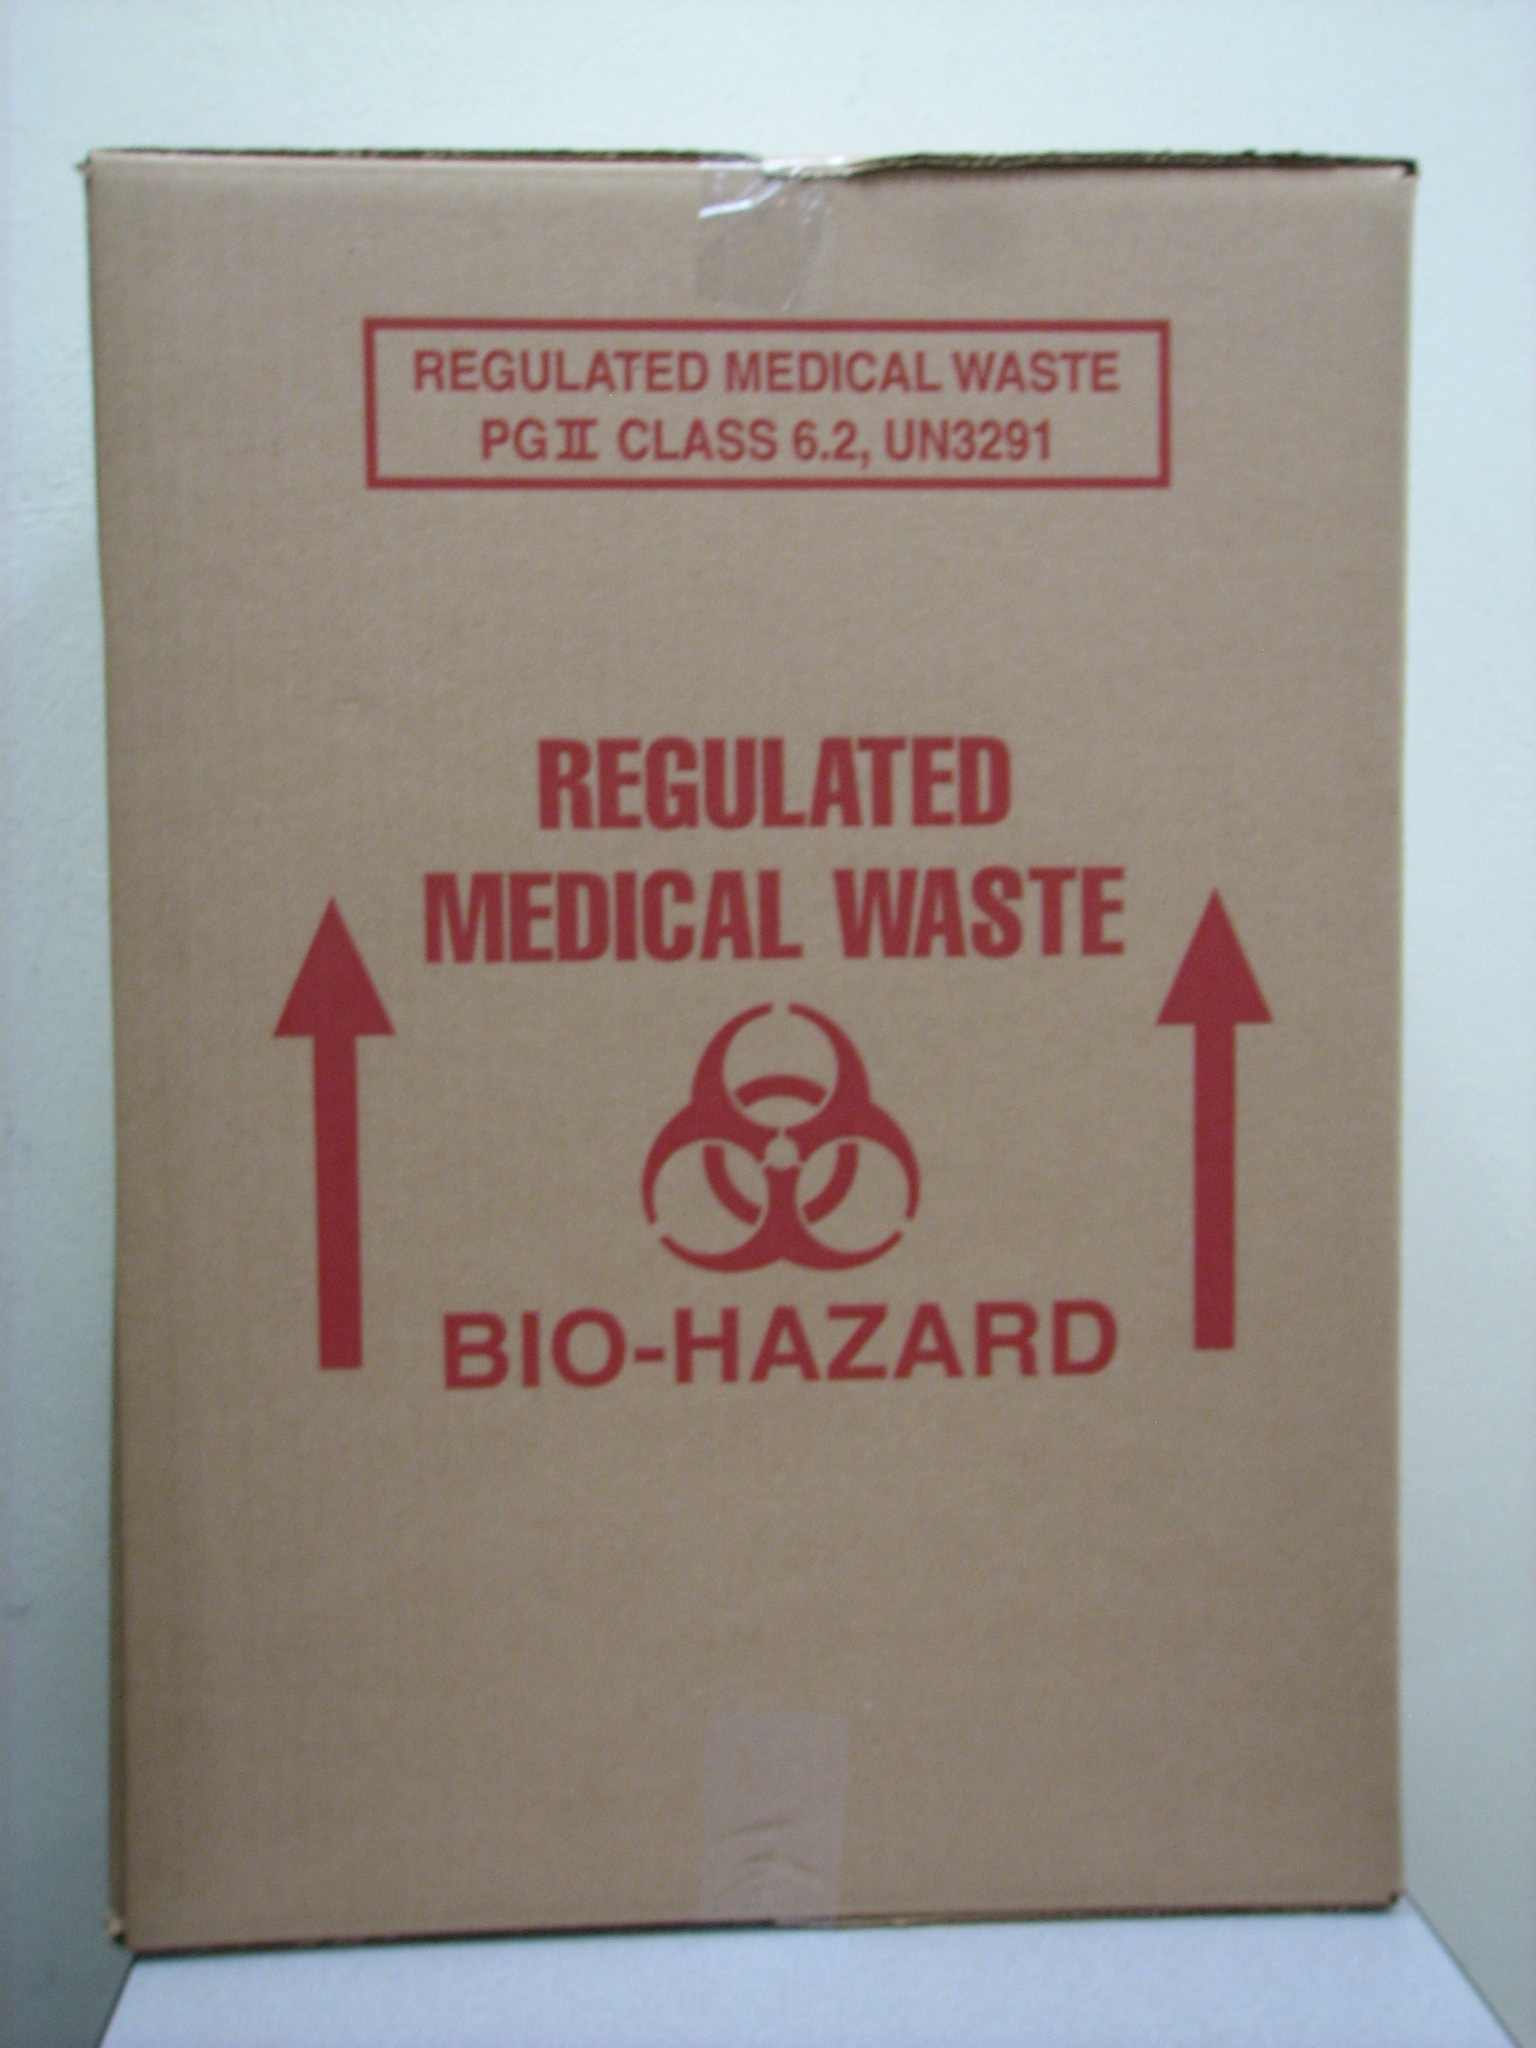 regulated medical waste cardboard box